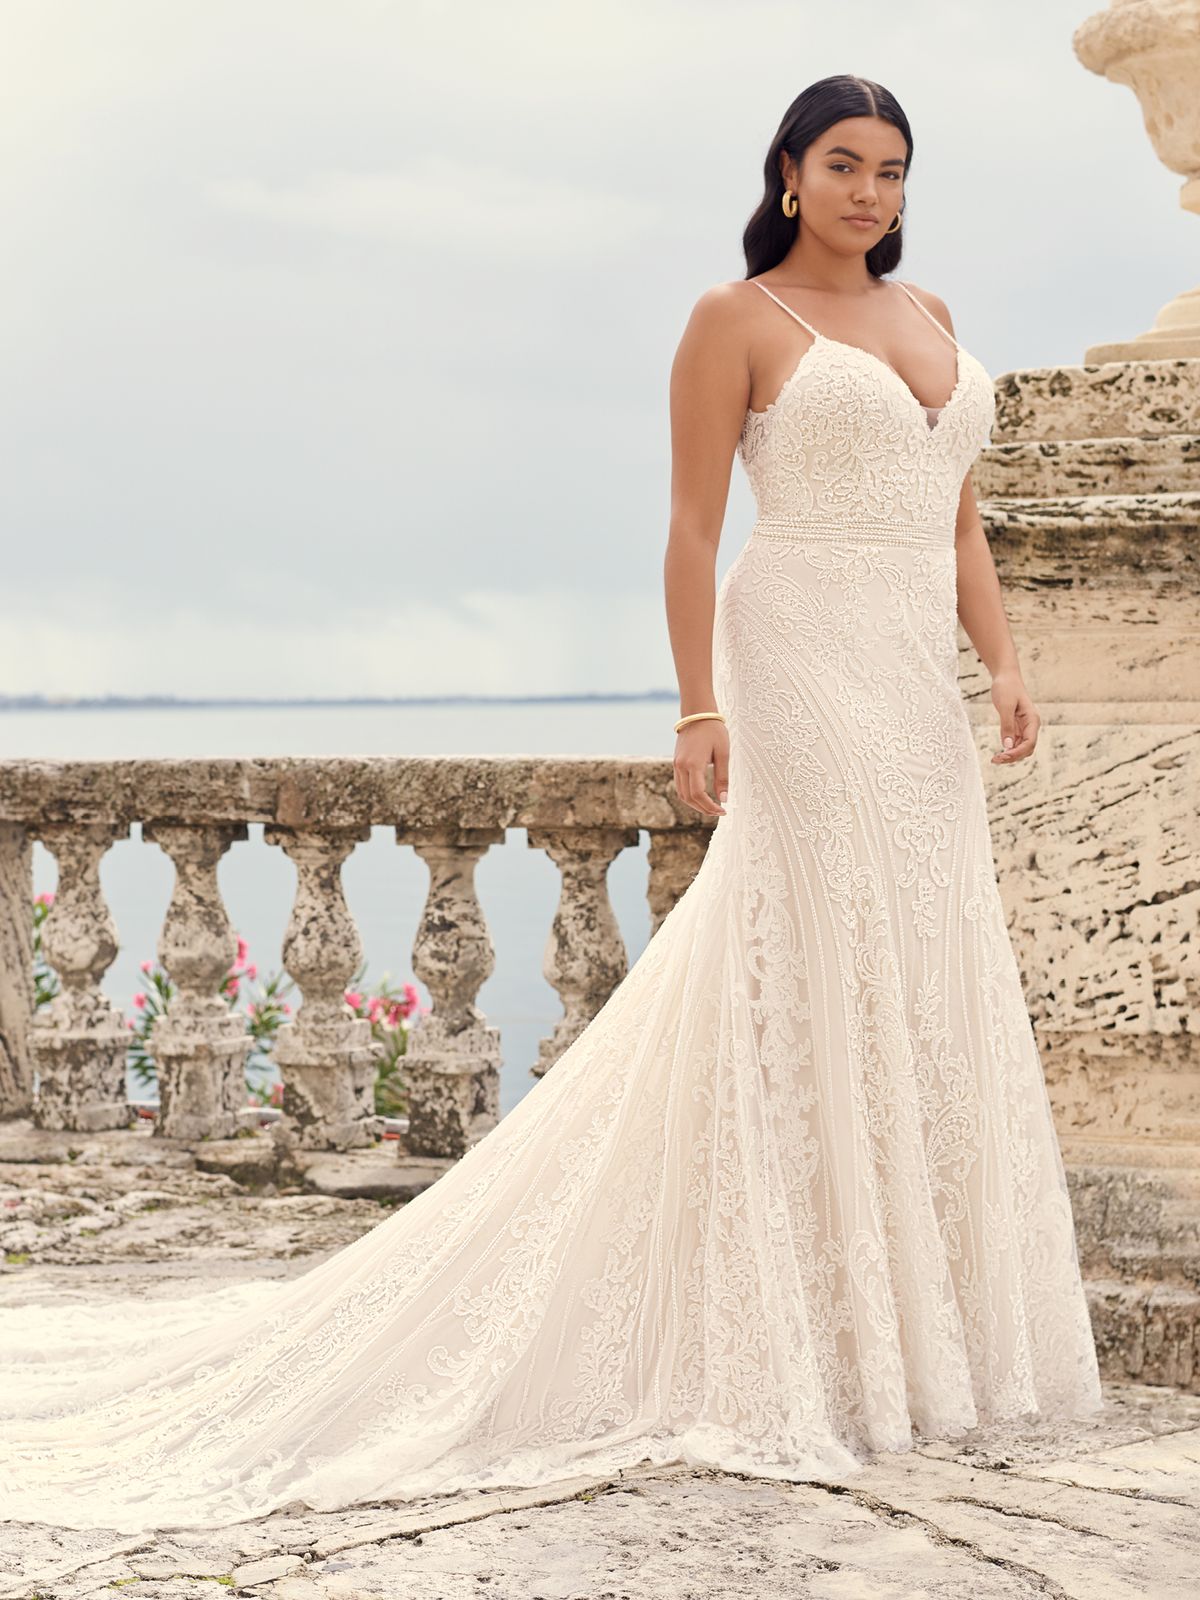 Detachable Train Lace Appliques Wedding Dress Mermaid White/Ivory Bridal  Gown | eBay